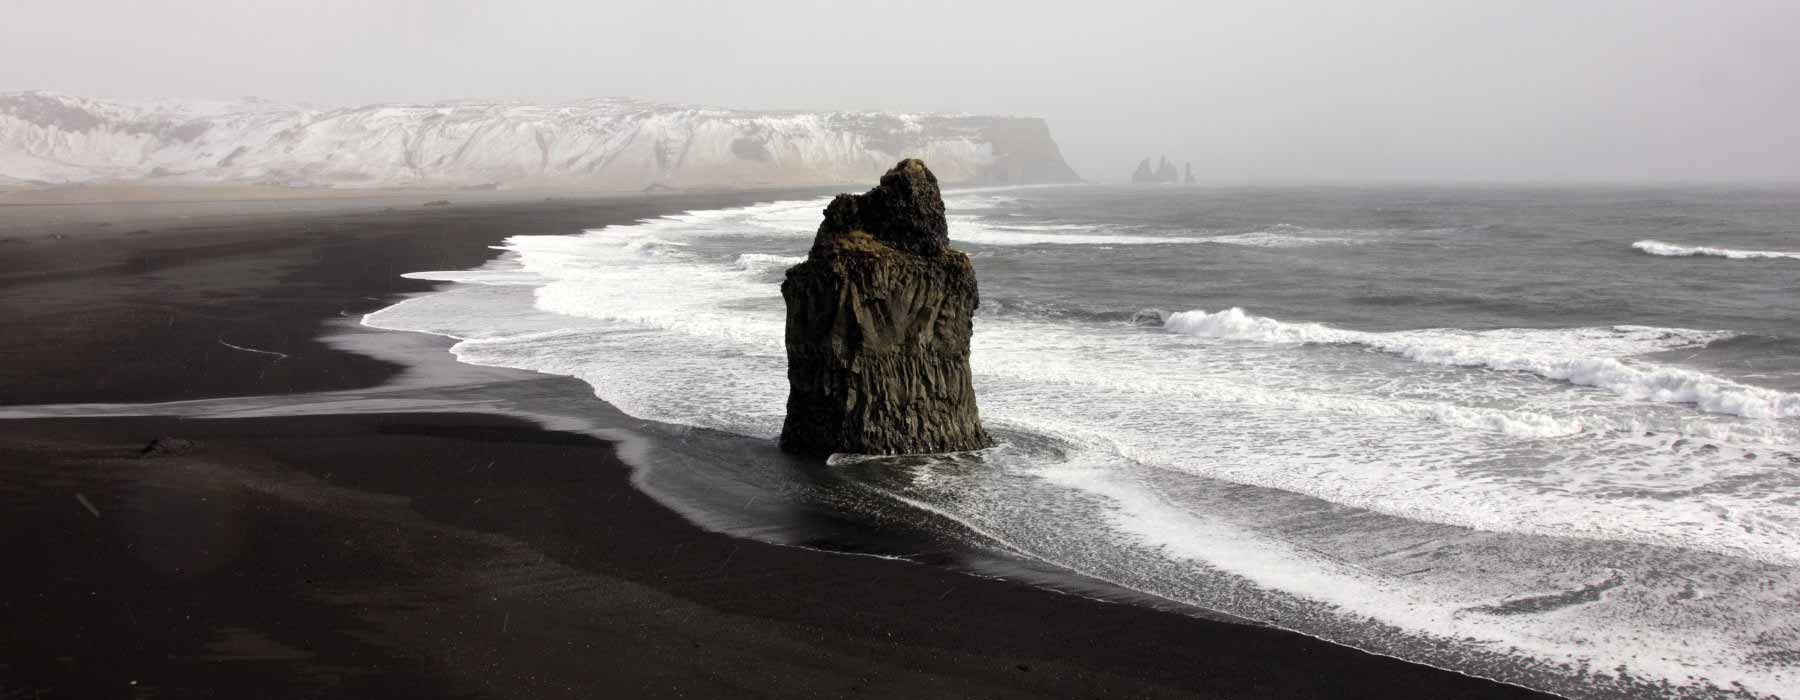 Iceland<br class="hidden-md hidden-lg" /> Luxury Holidays